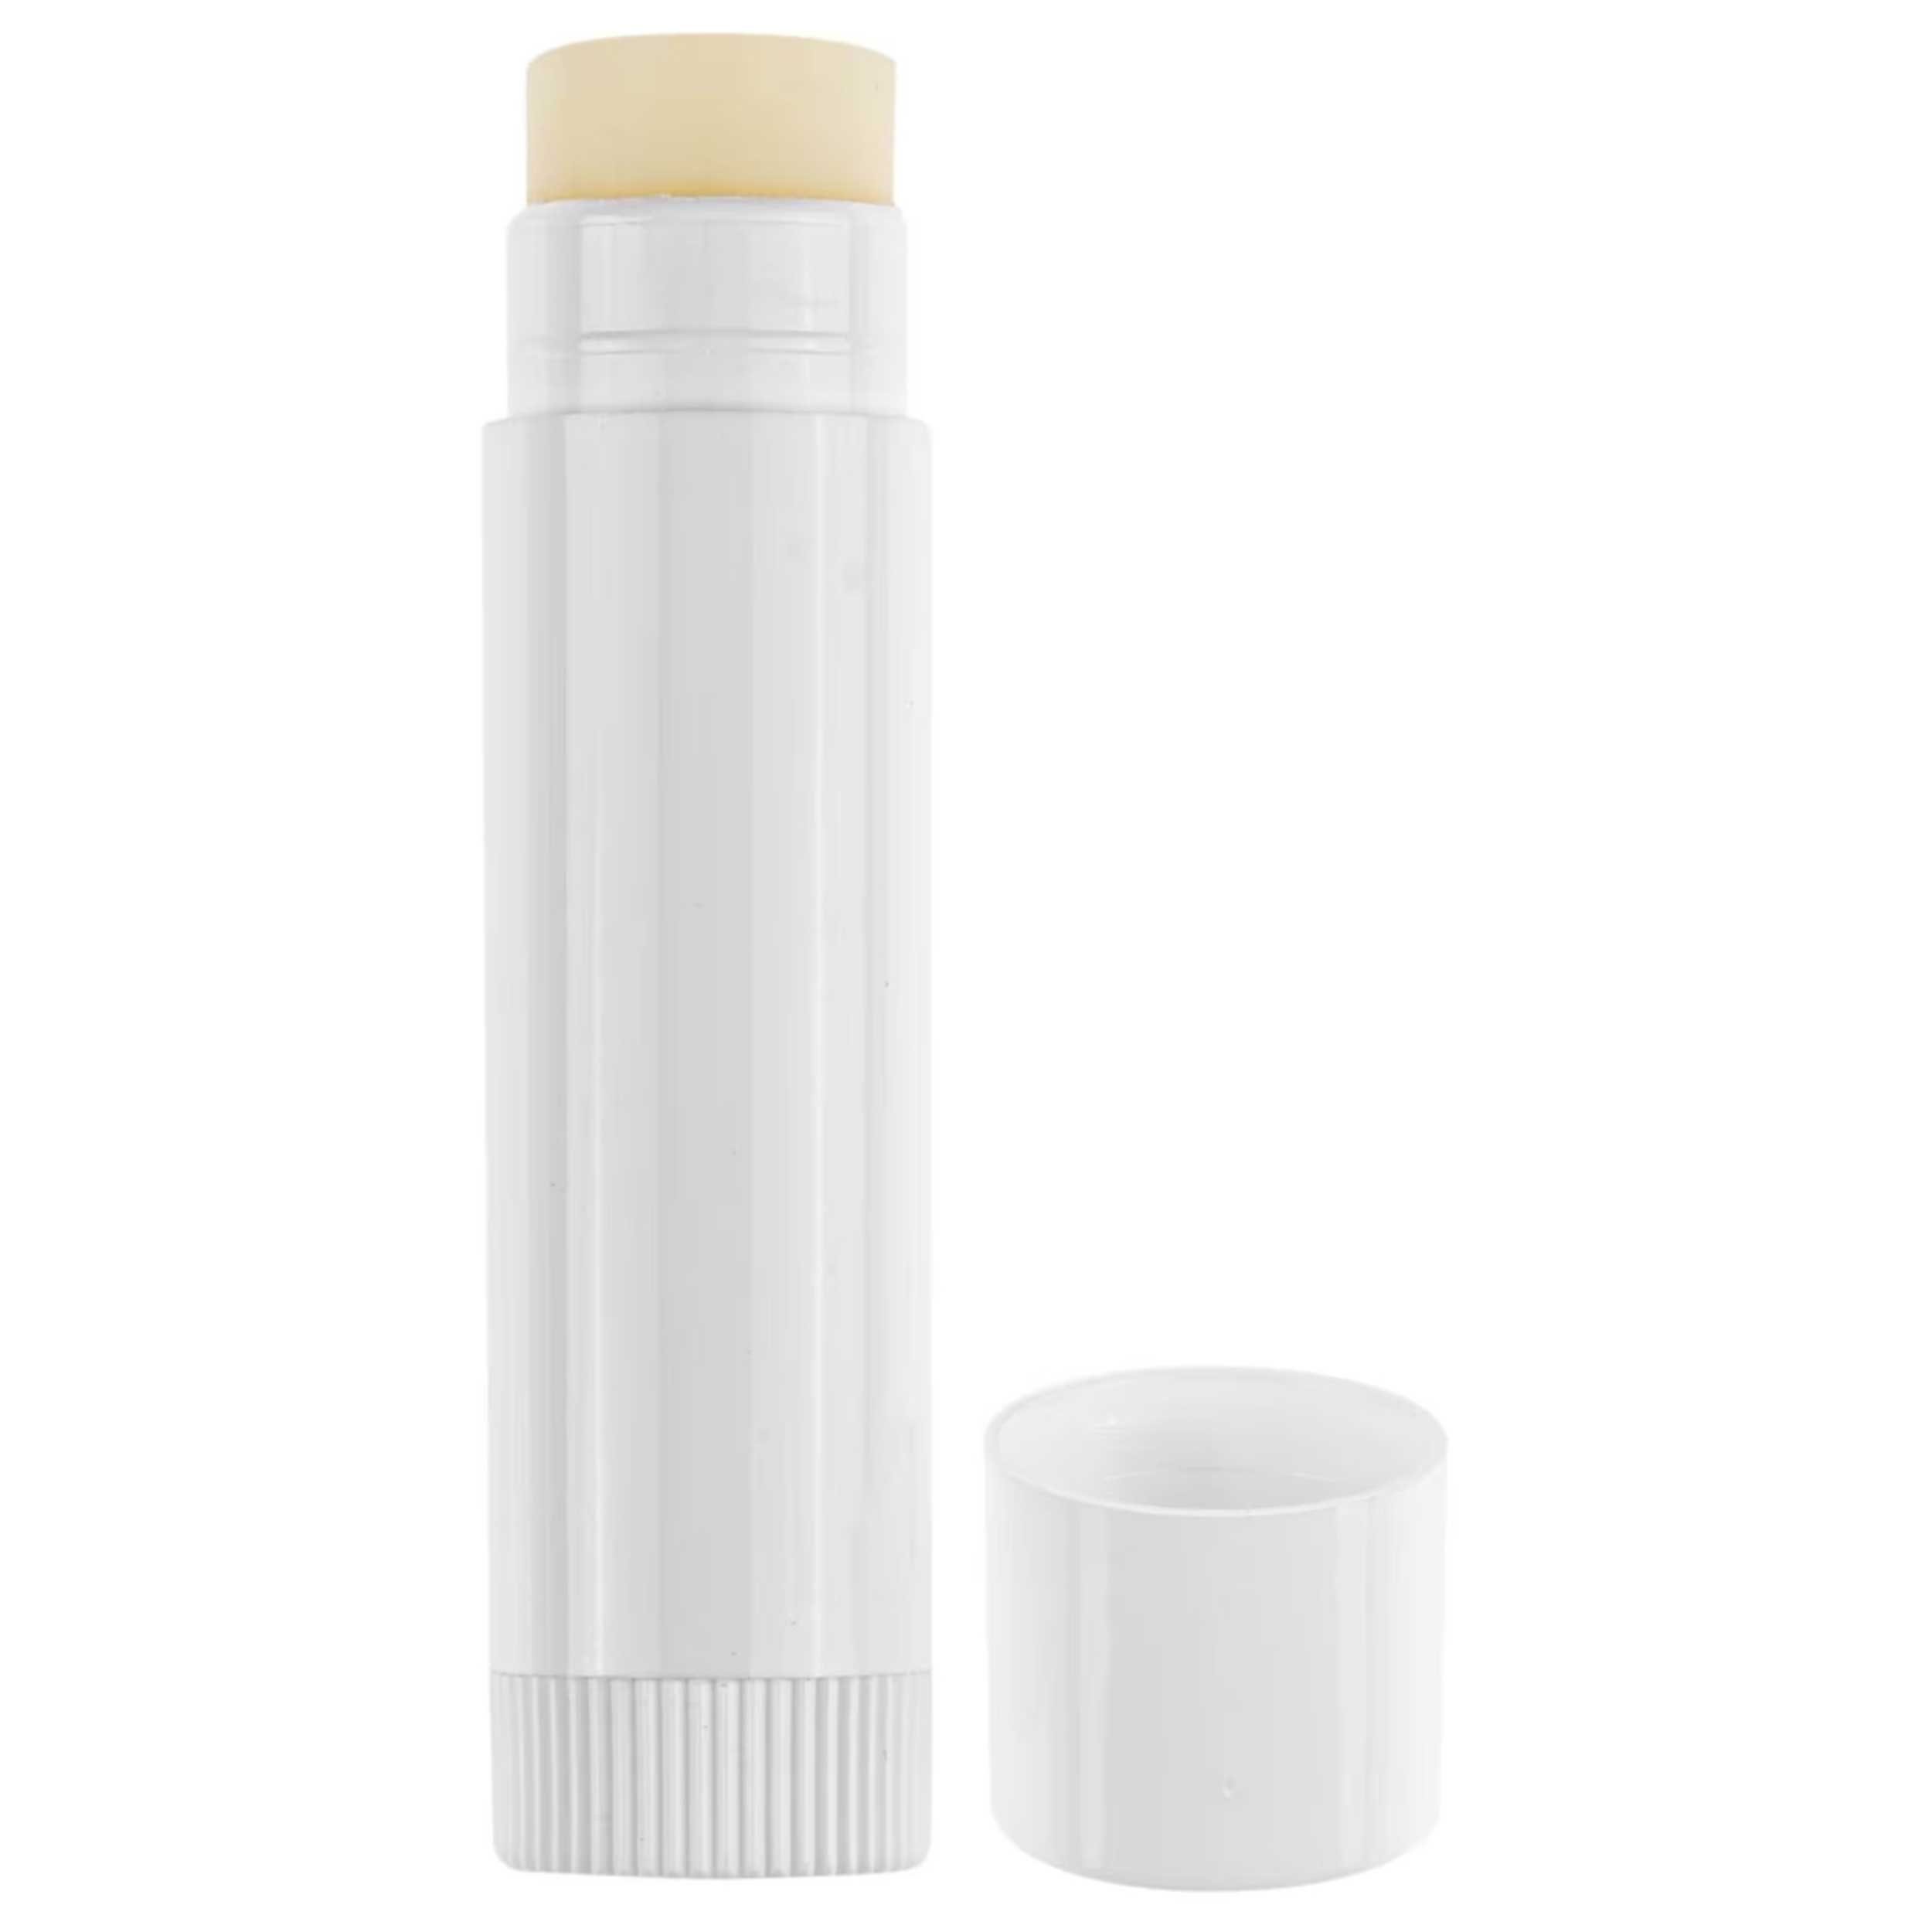 Malantis Lippenpflegemittel Hülsen leer Drehstift ohne basteln zum Lippenpflegestift, Füllung, DIY Tubes selber 50-tlg., leer, Do-it-yourself, machen